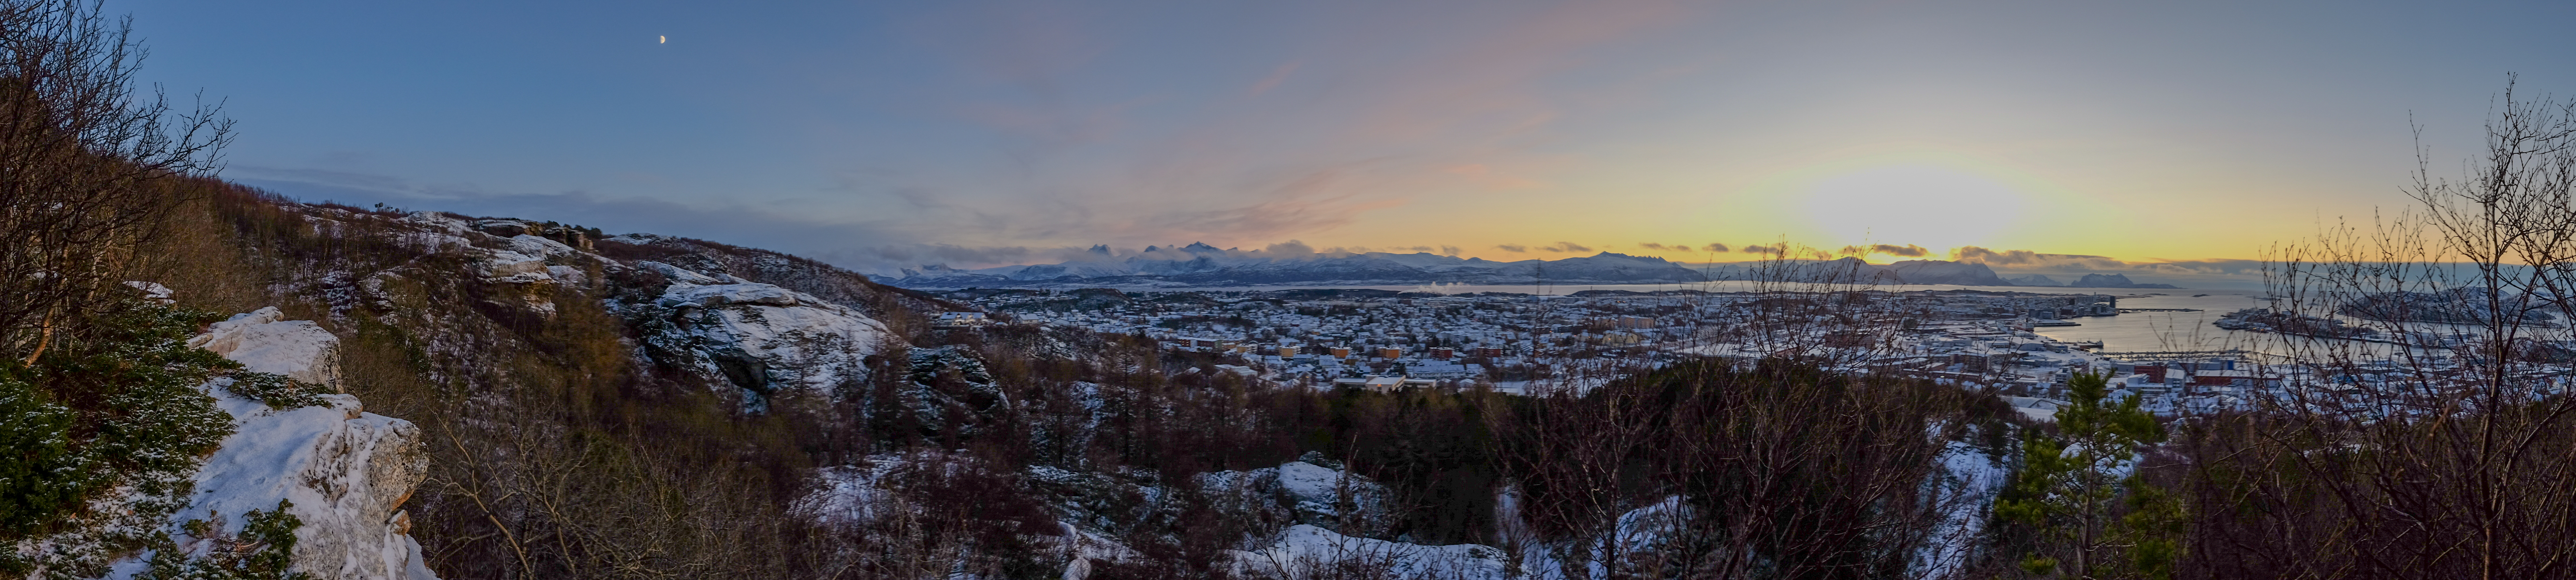 Linken snow view panorama photo